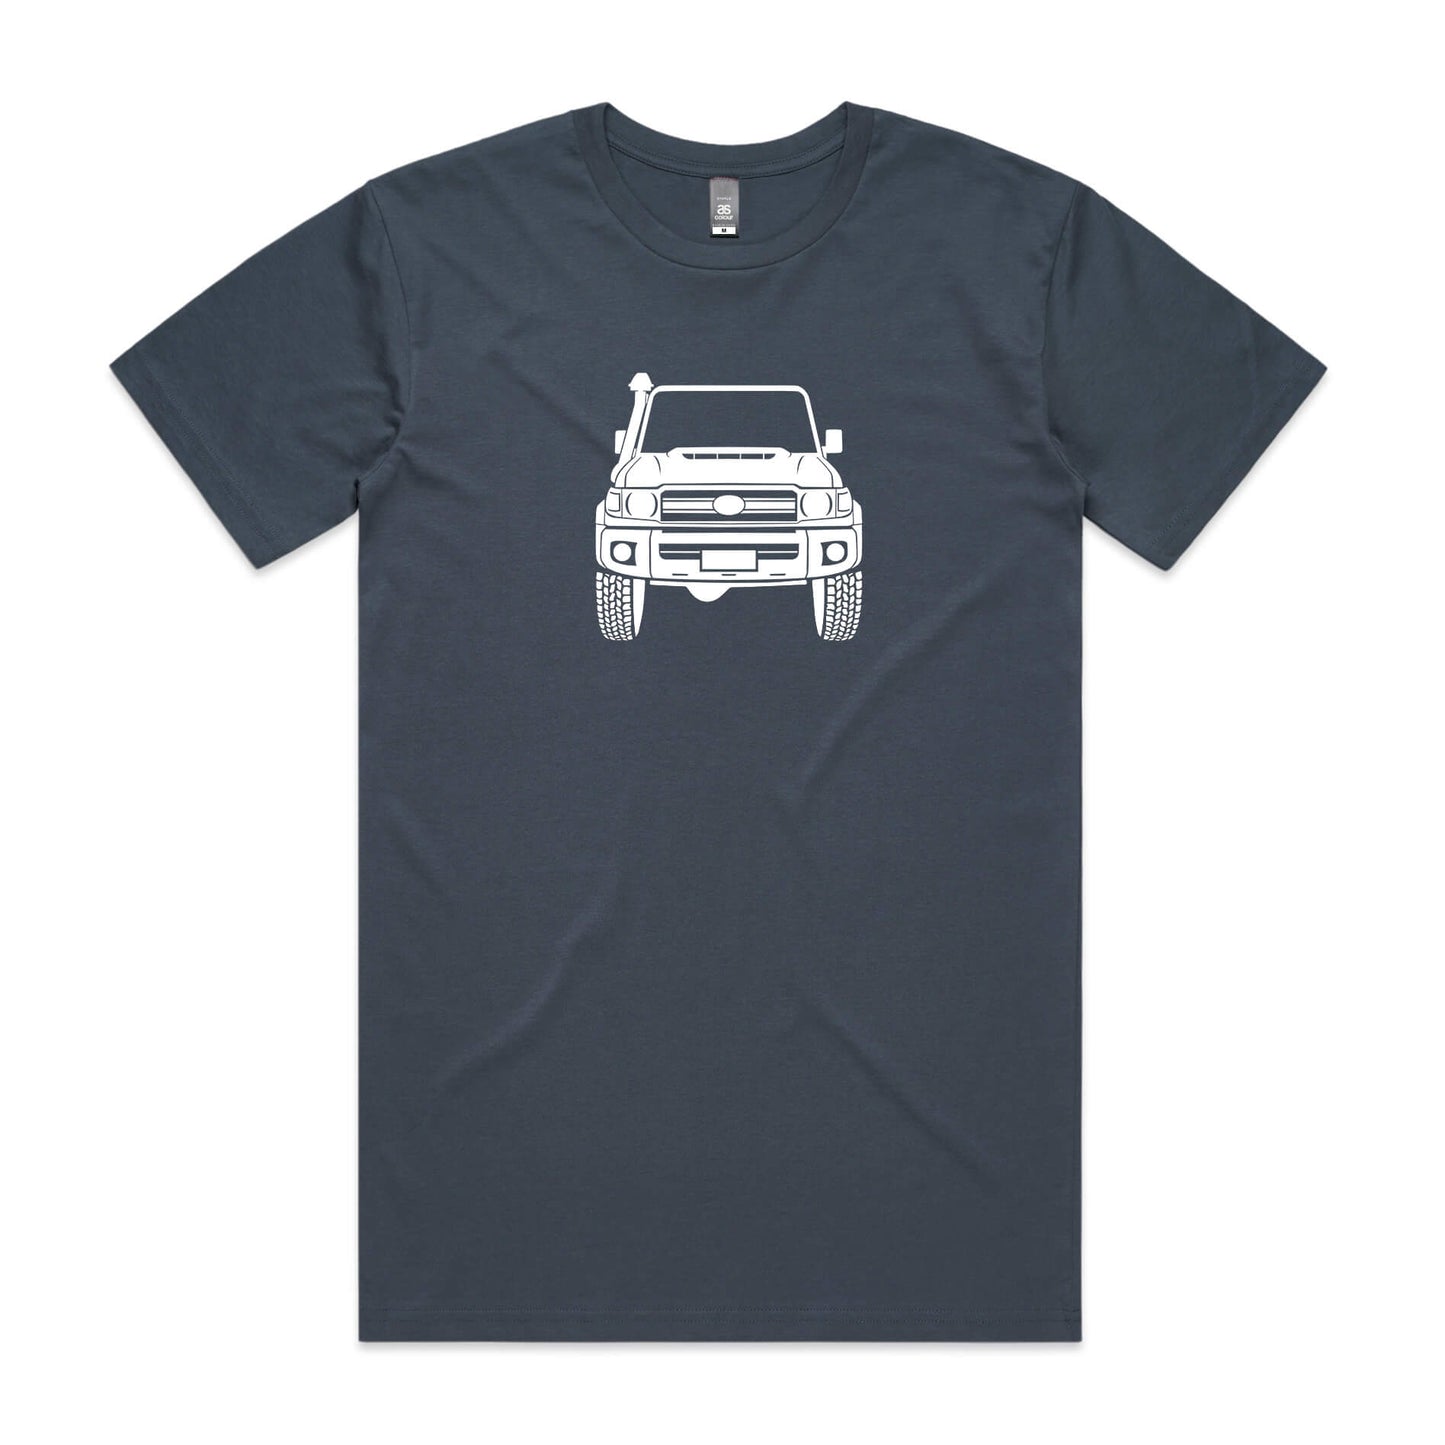 Toyota LandCruiser 70 t-shirt in petrol blue